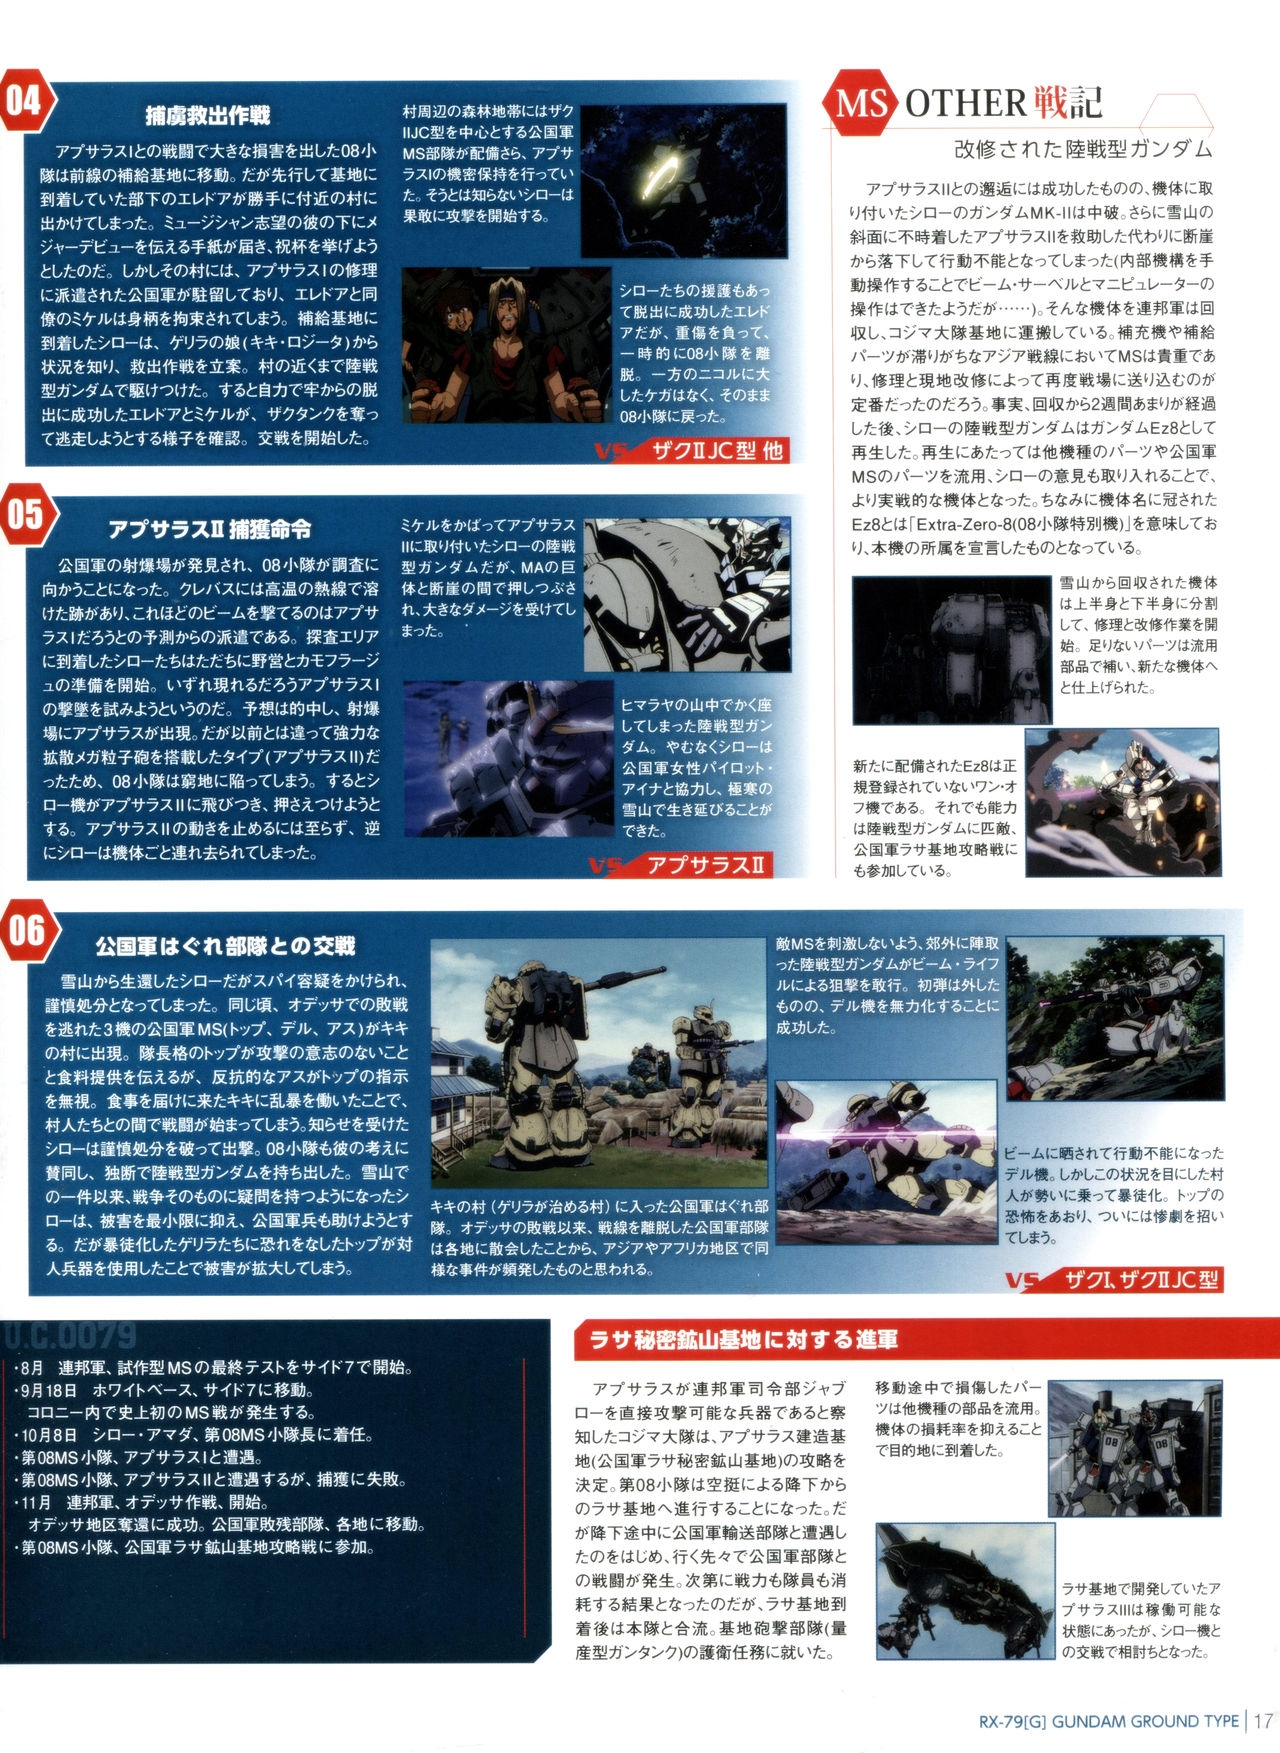 Gundam Mobile Suit Bible 15 18